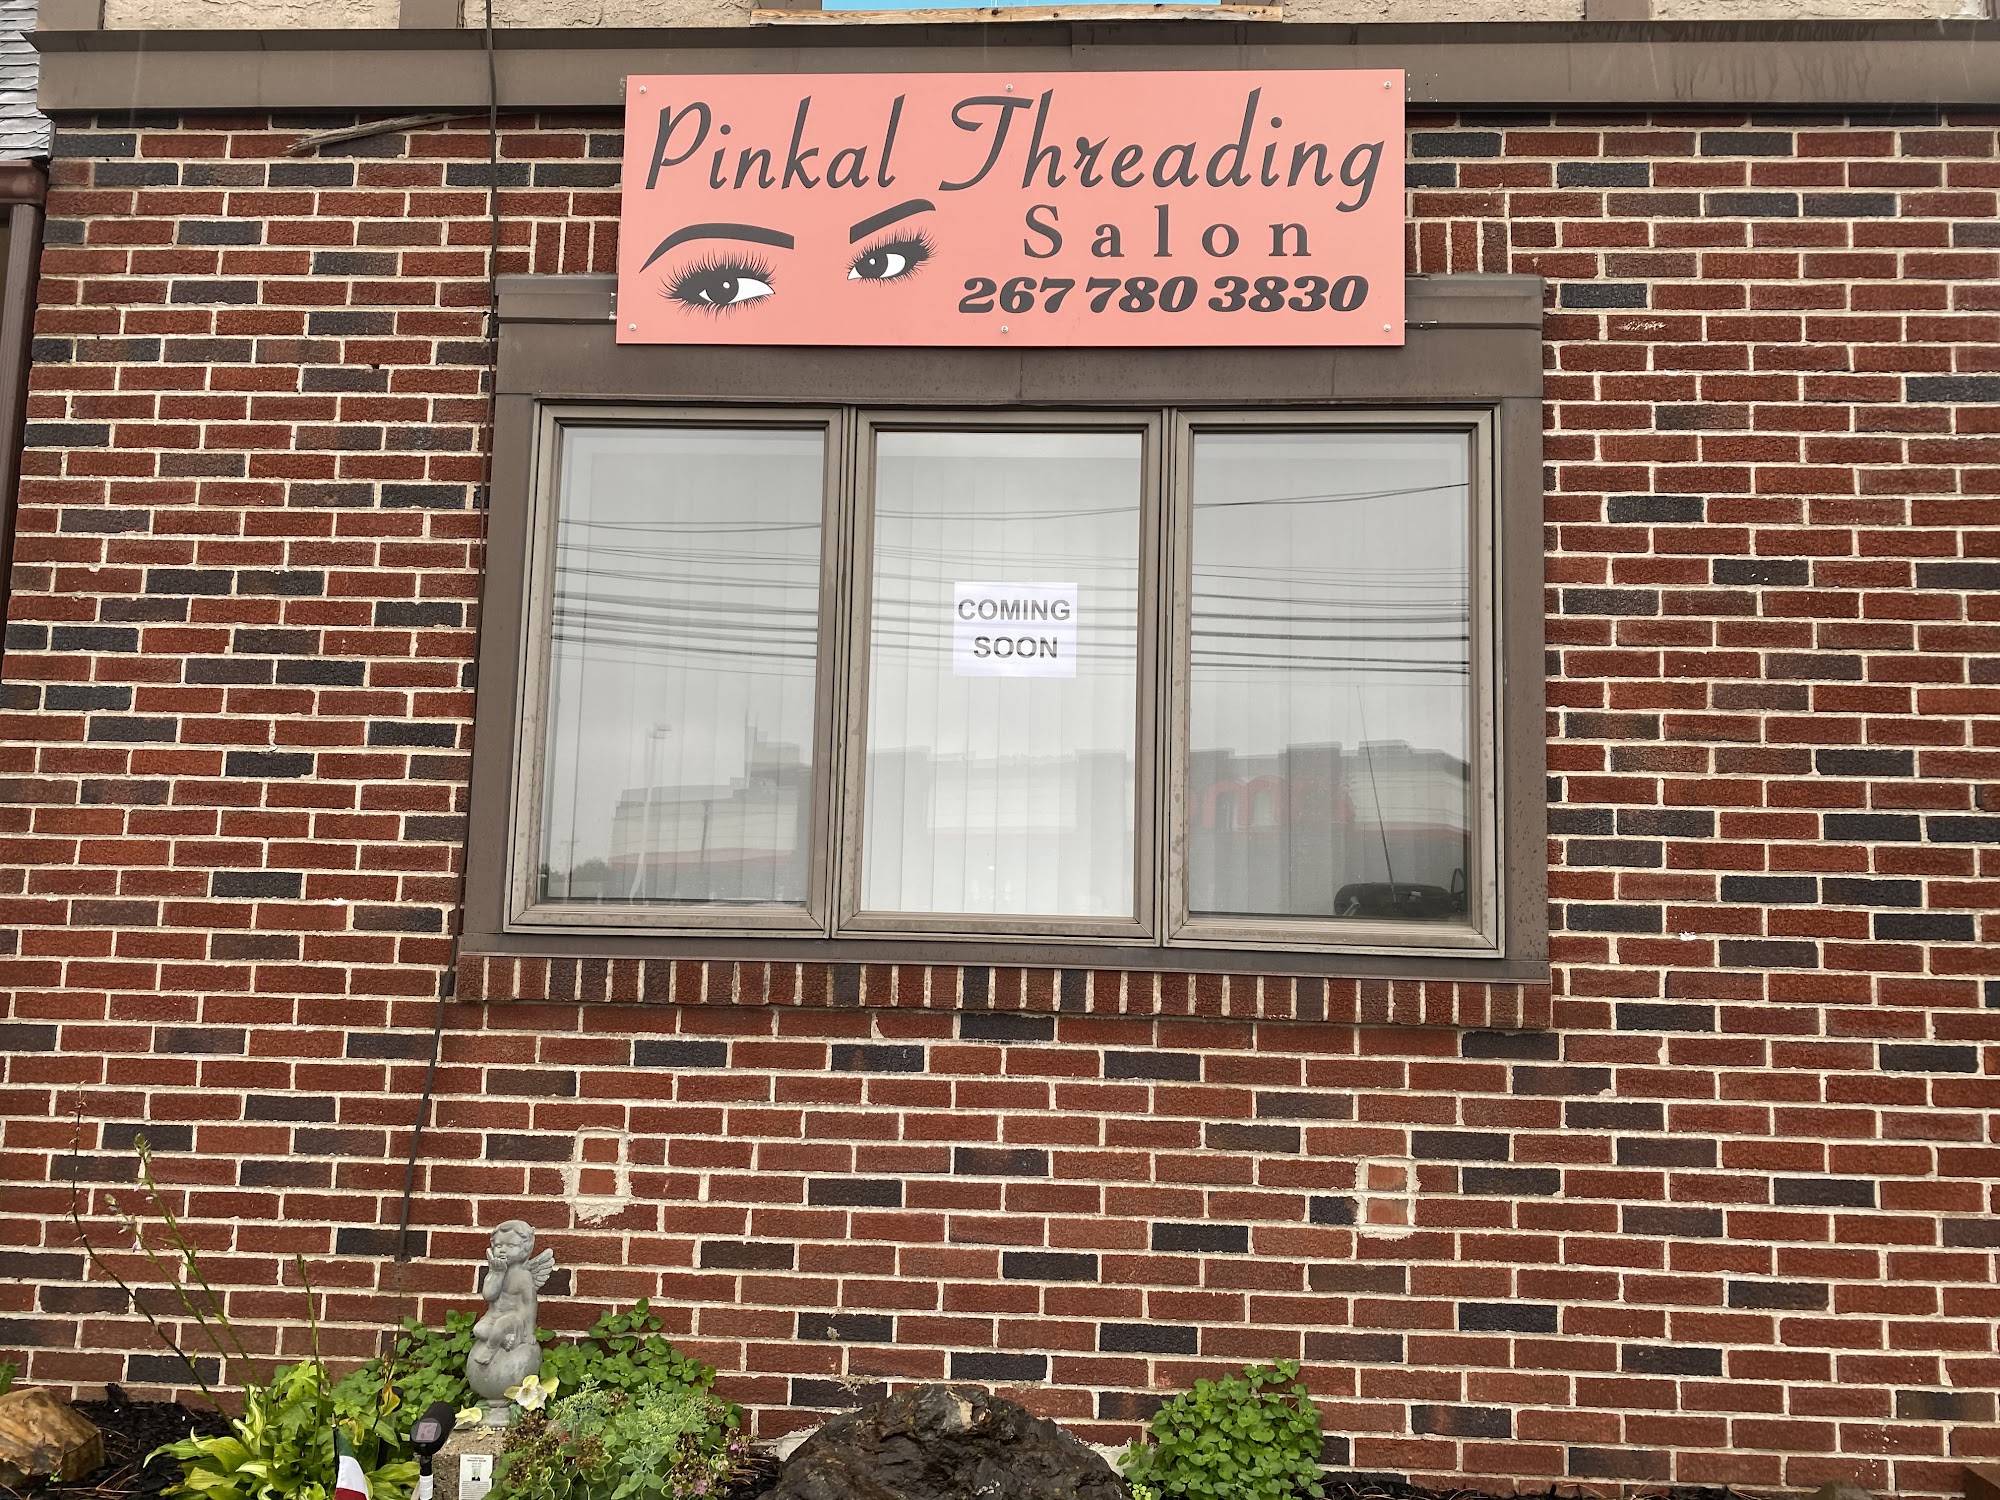 Pinkal Threading salon